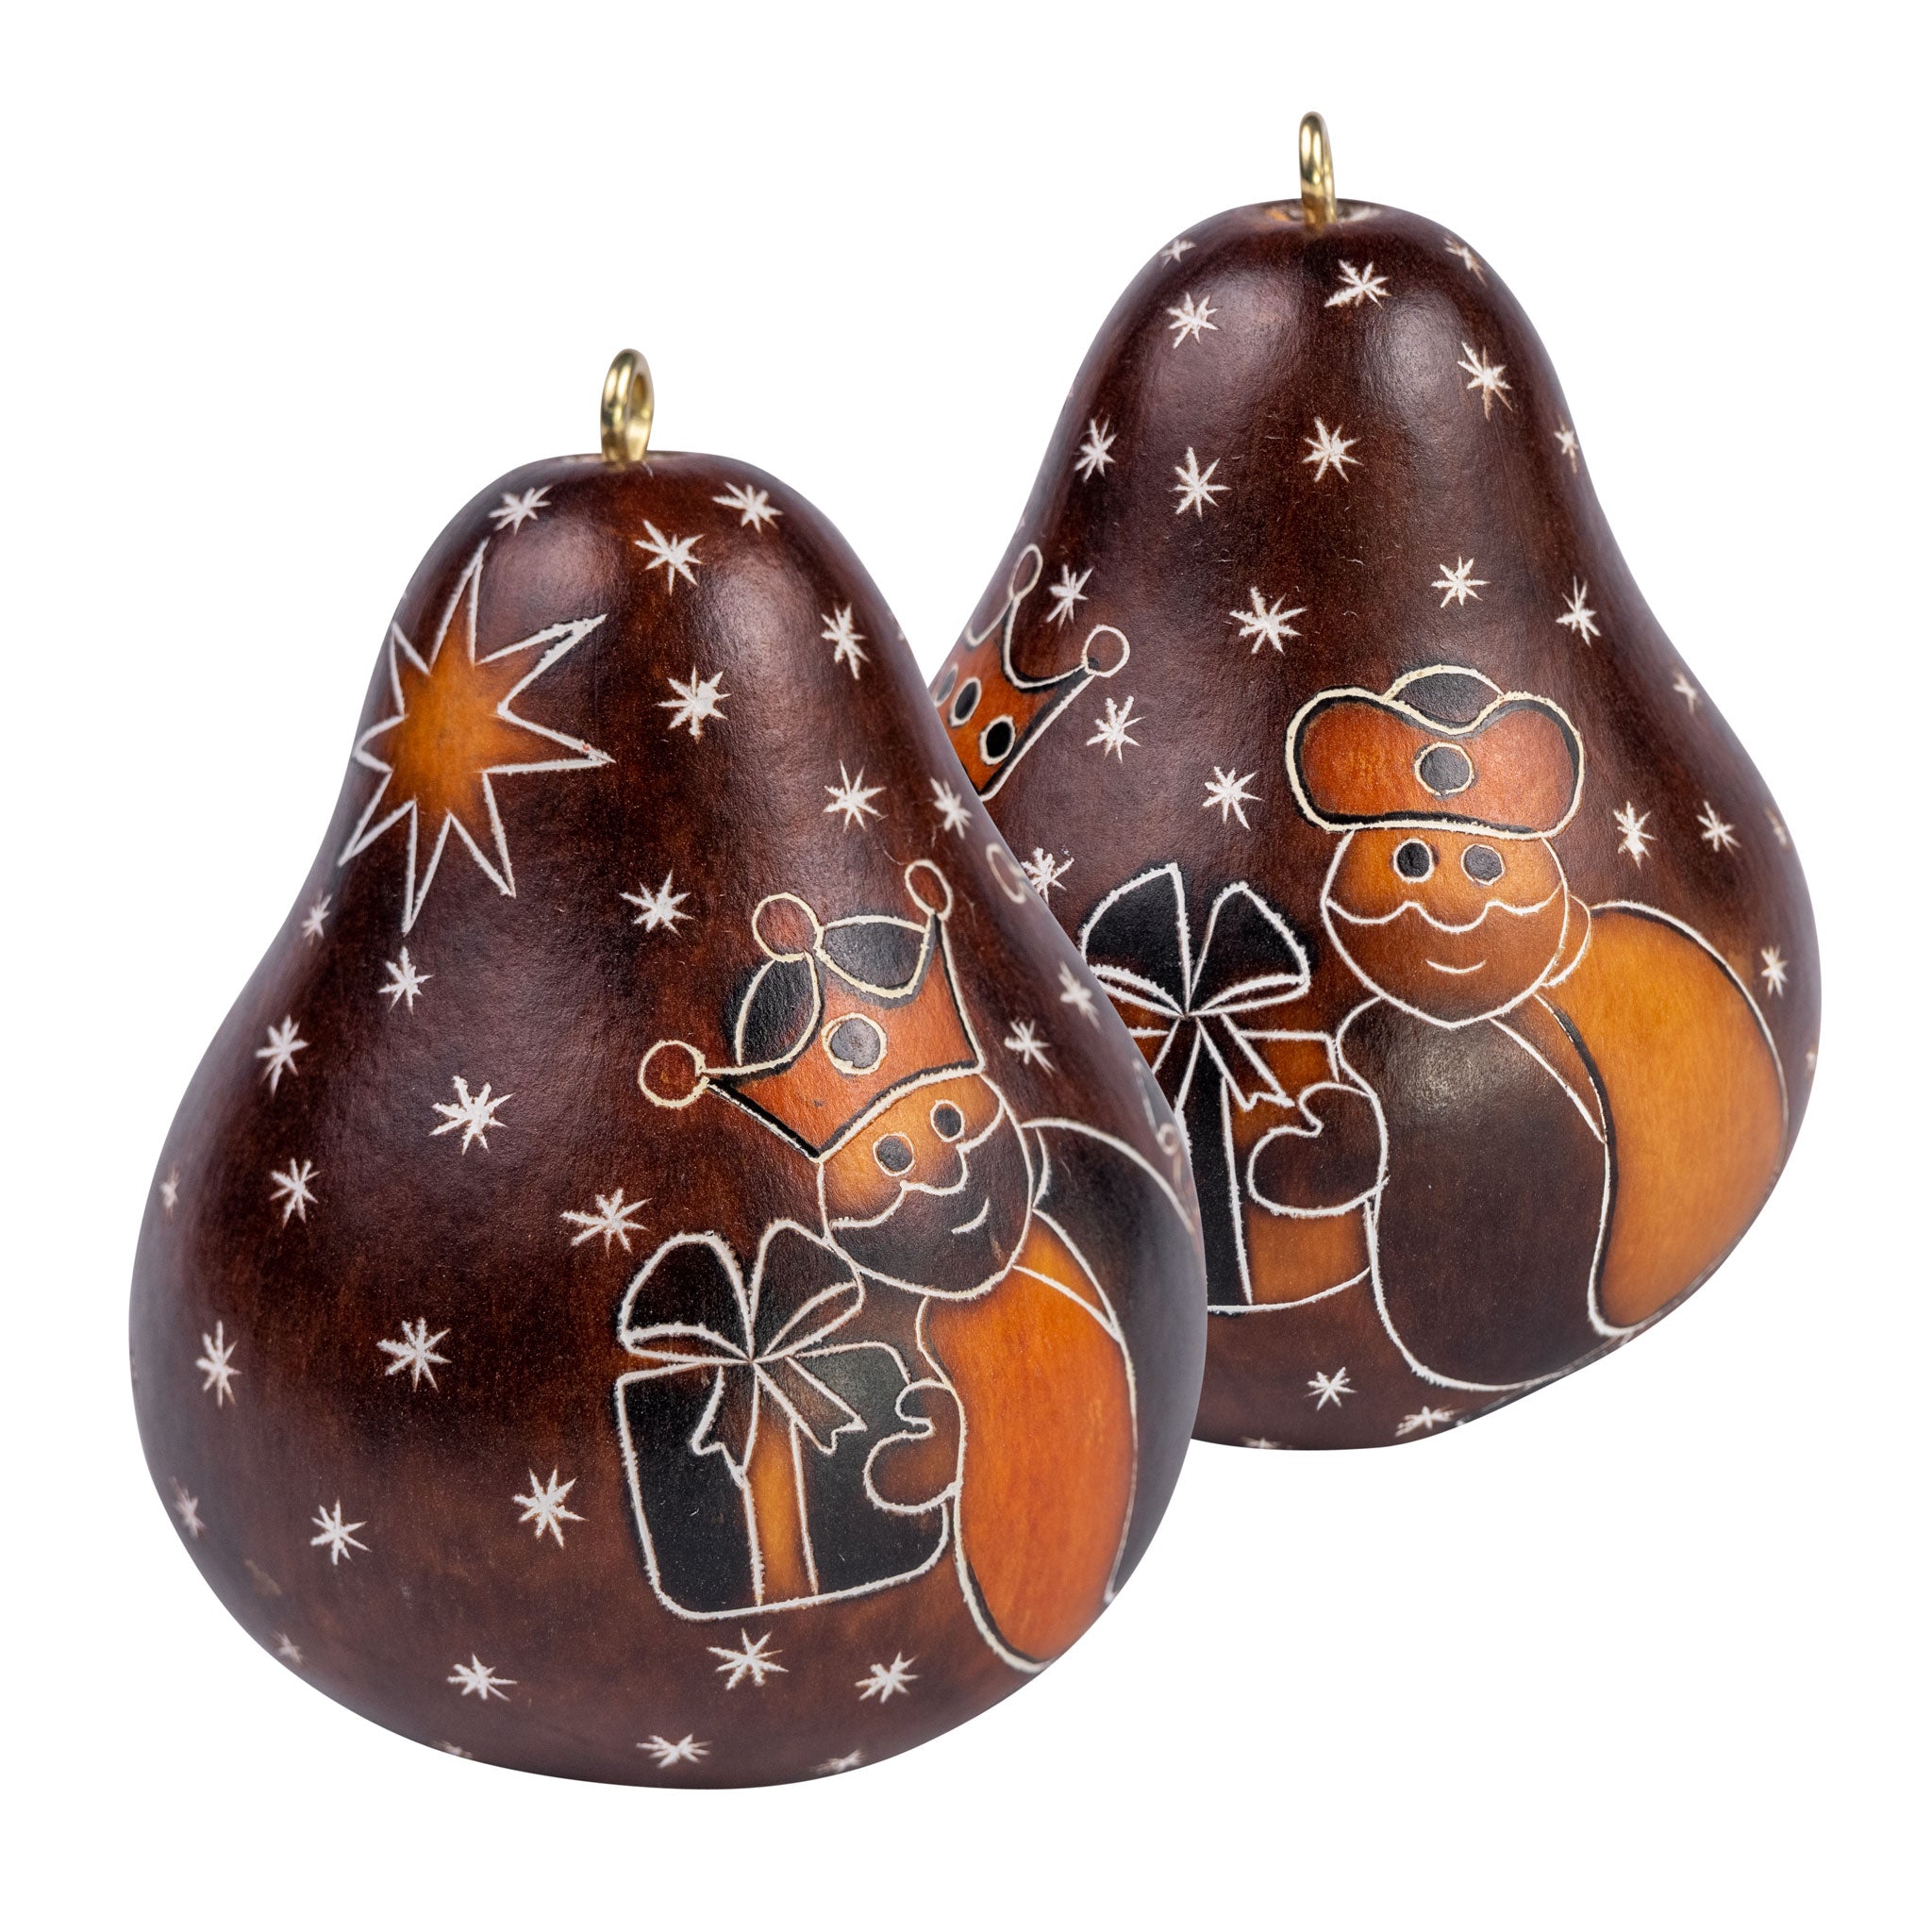 Kings - Mini Gourd Ornament